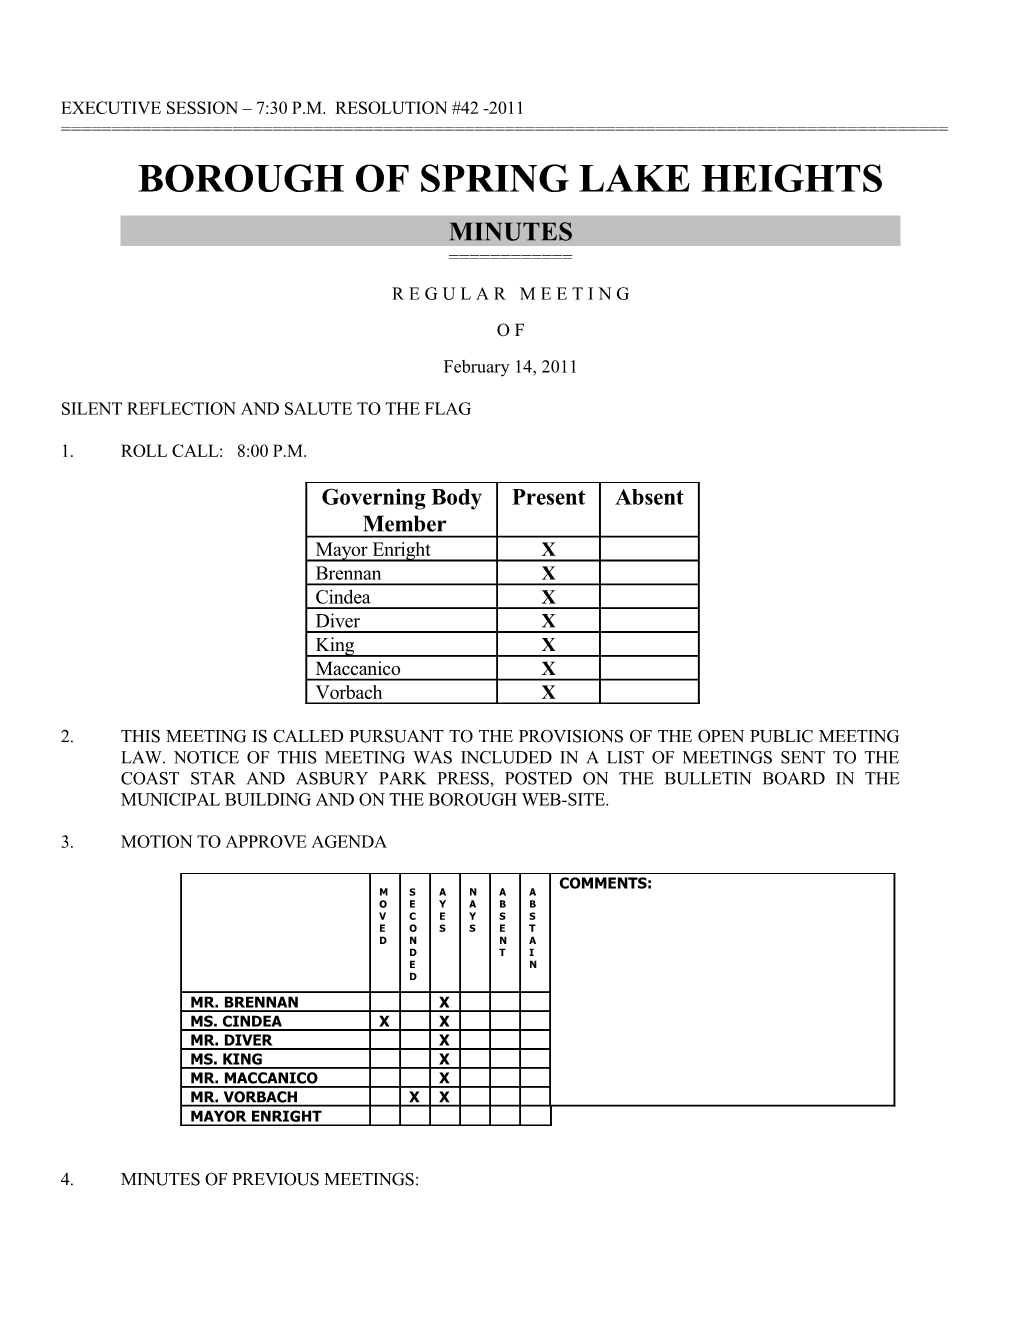 Borough of Spring Lake Heights